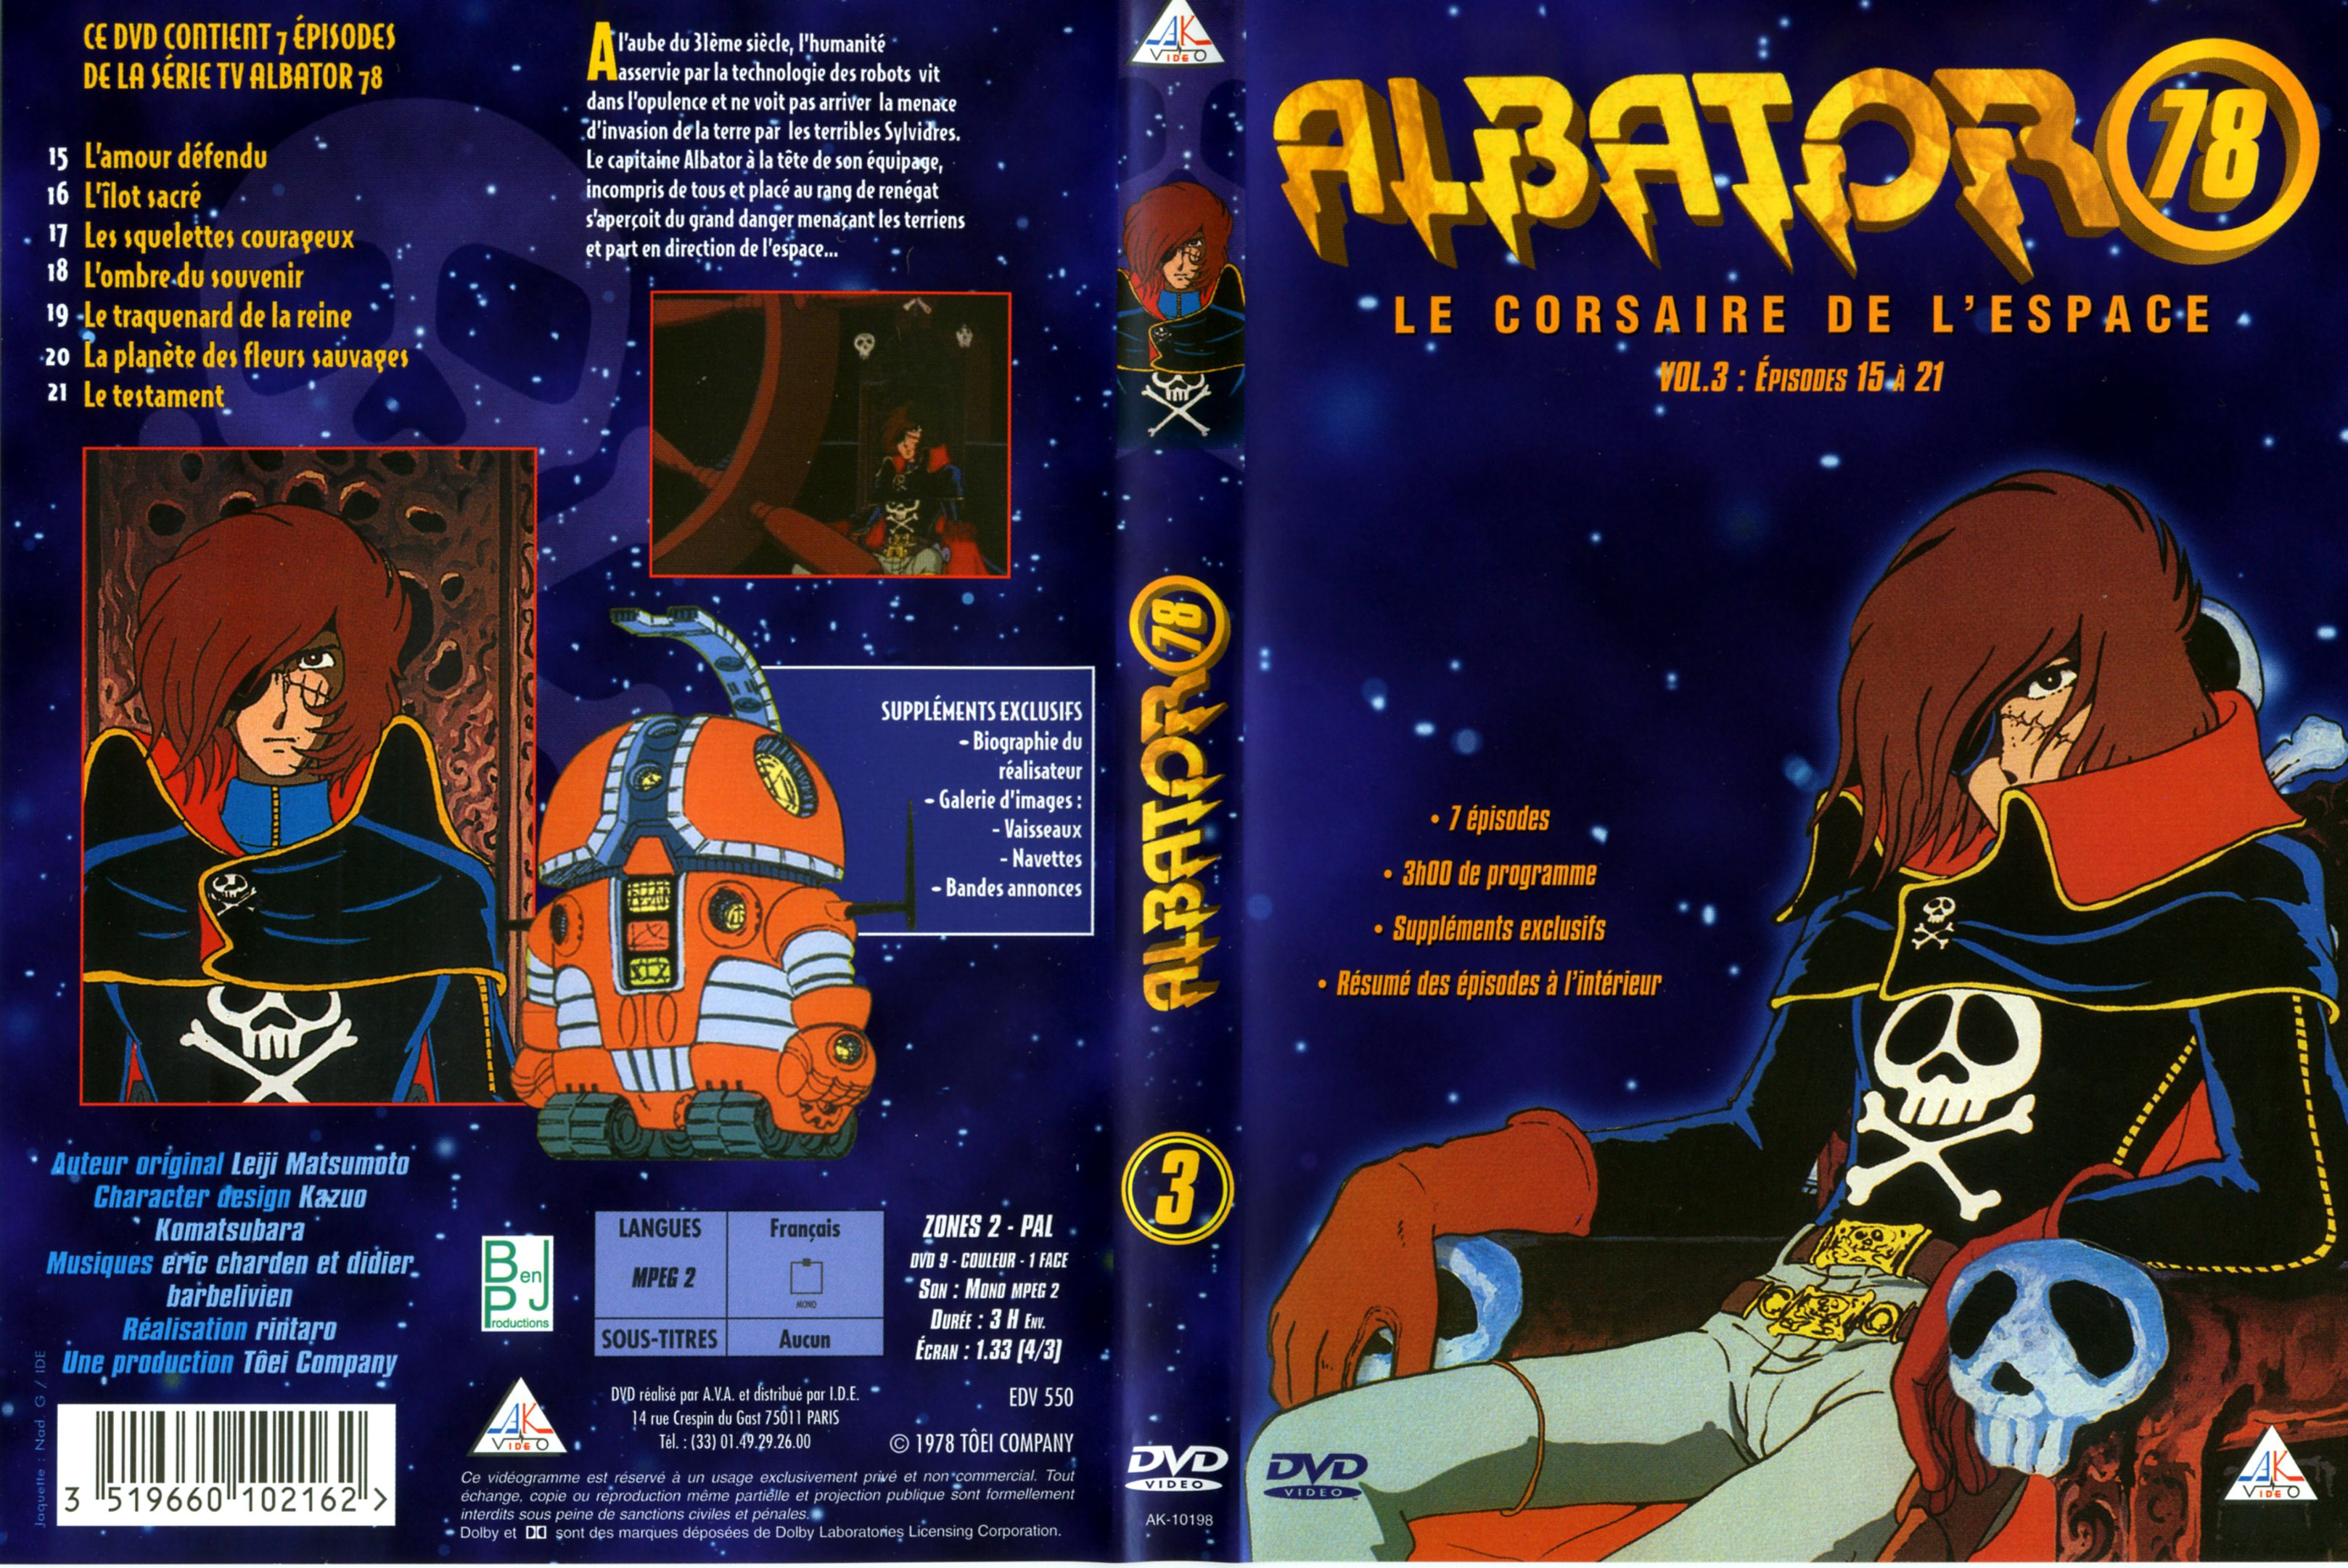 Jaquette DVD Albator 78 vol 3 (AK VIDEO)